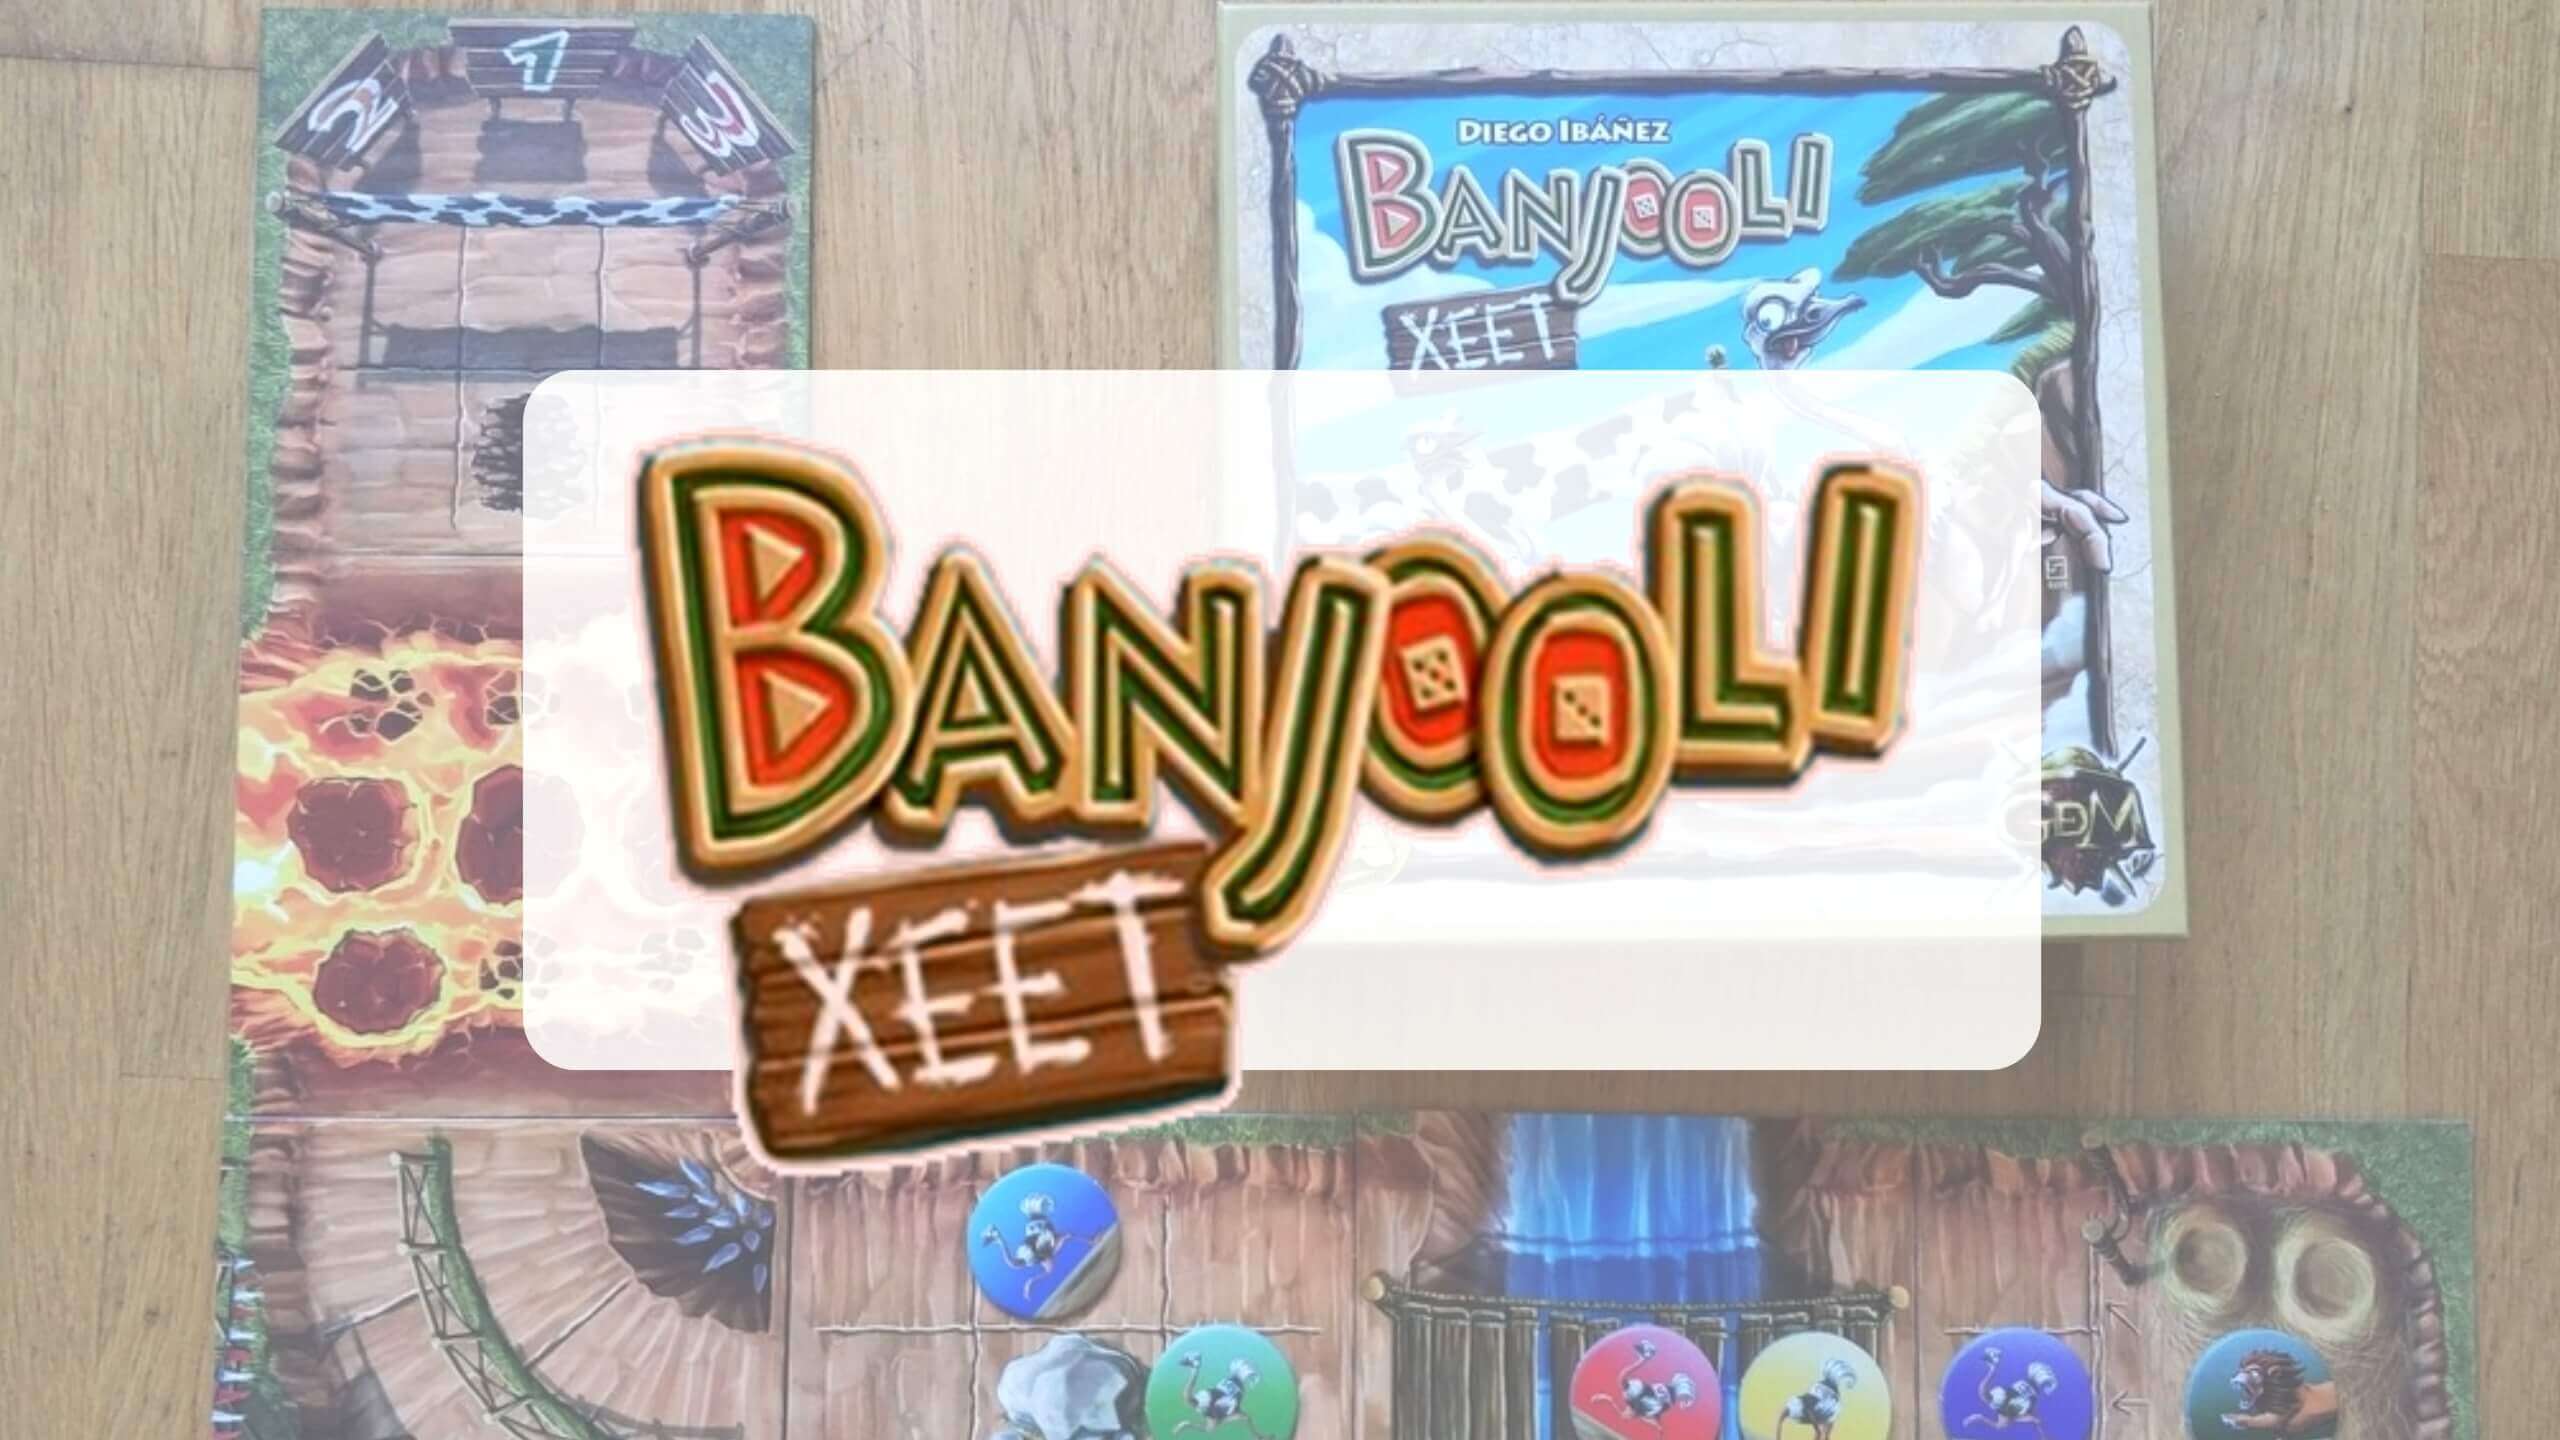 reseña cómo se juega juego de mesa Banjooli Xeet